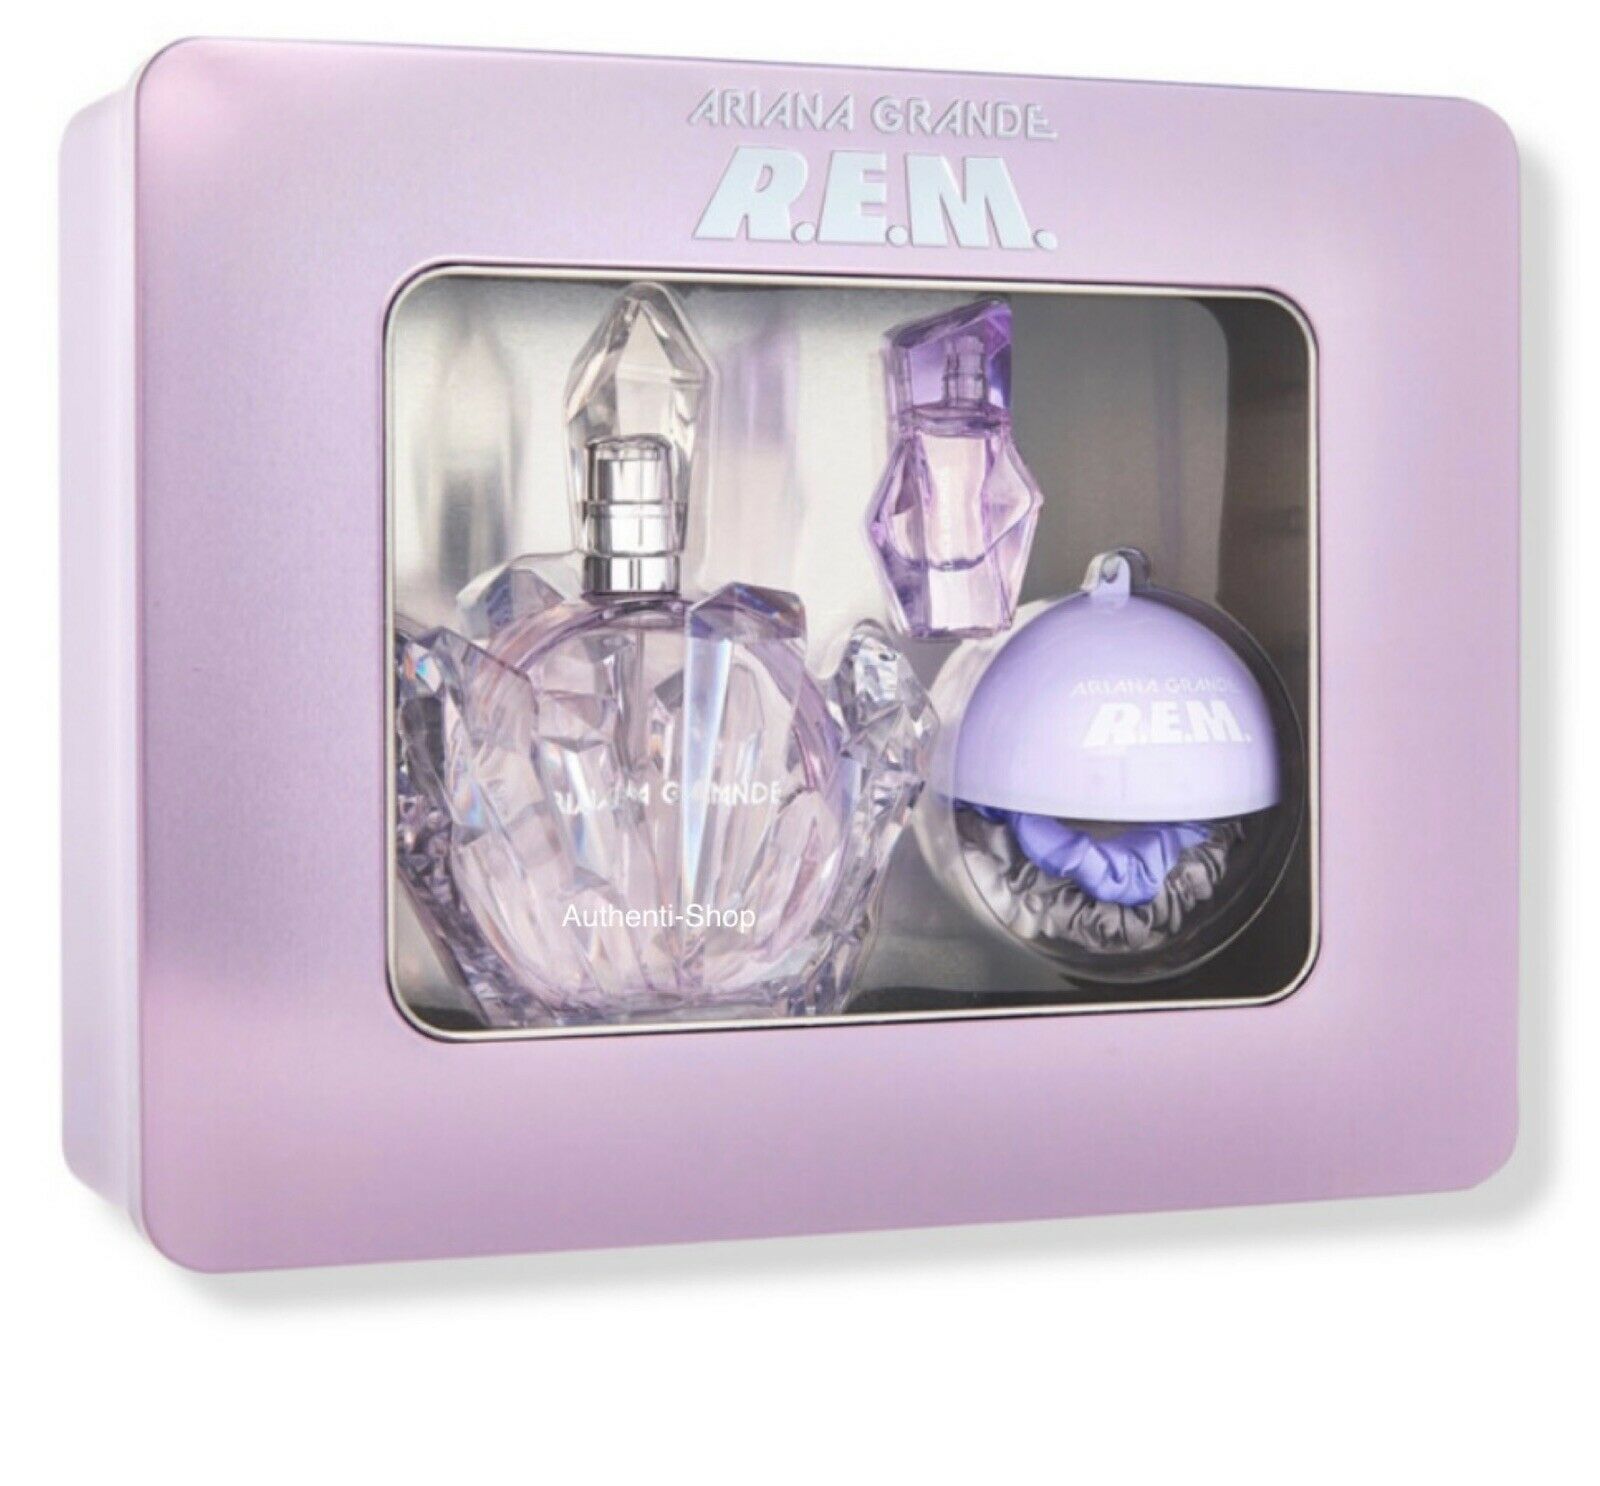 Amazing 3 Piece Gift Set Eau De Parfum, Fragrance For Women - Daywear,  Casual Daily Cologne Set with Deluxe Suede Pouch- 3.4 Oz Bottle, 2.7 Oz  Body